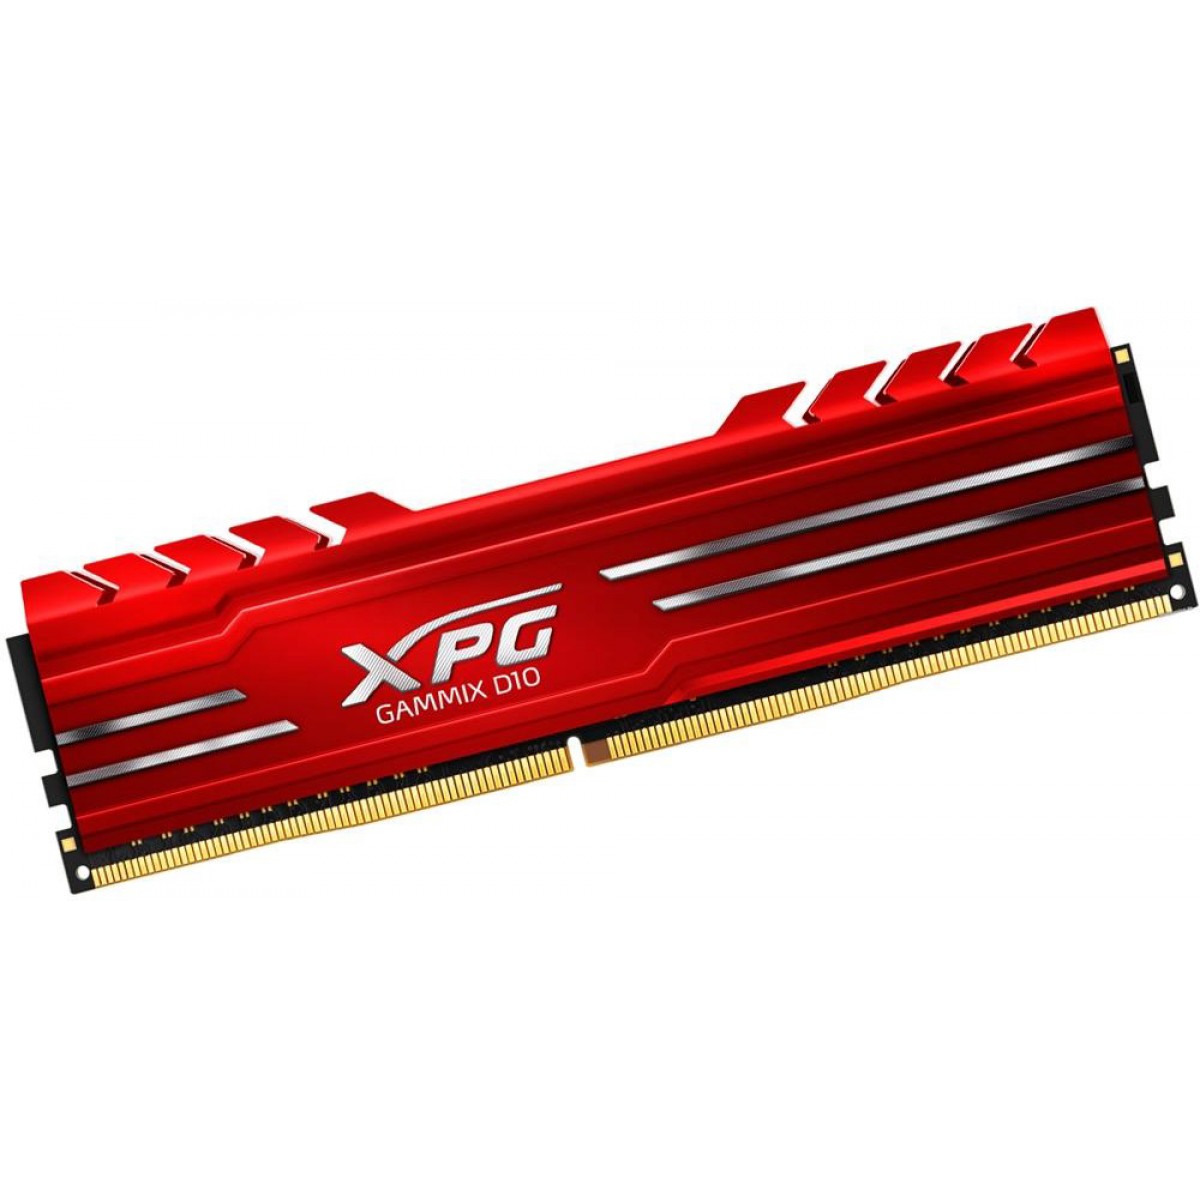 Memória DDR4 XPG Gammix D10, 8GB 3200Mhz, CL16, Red, AX4U320038G16A-SR10